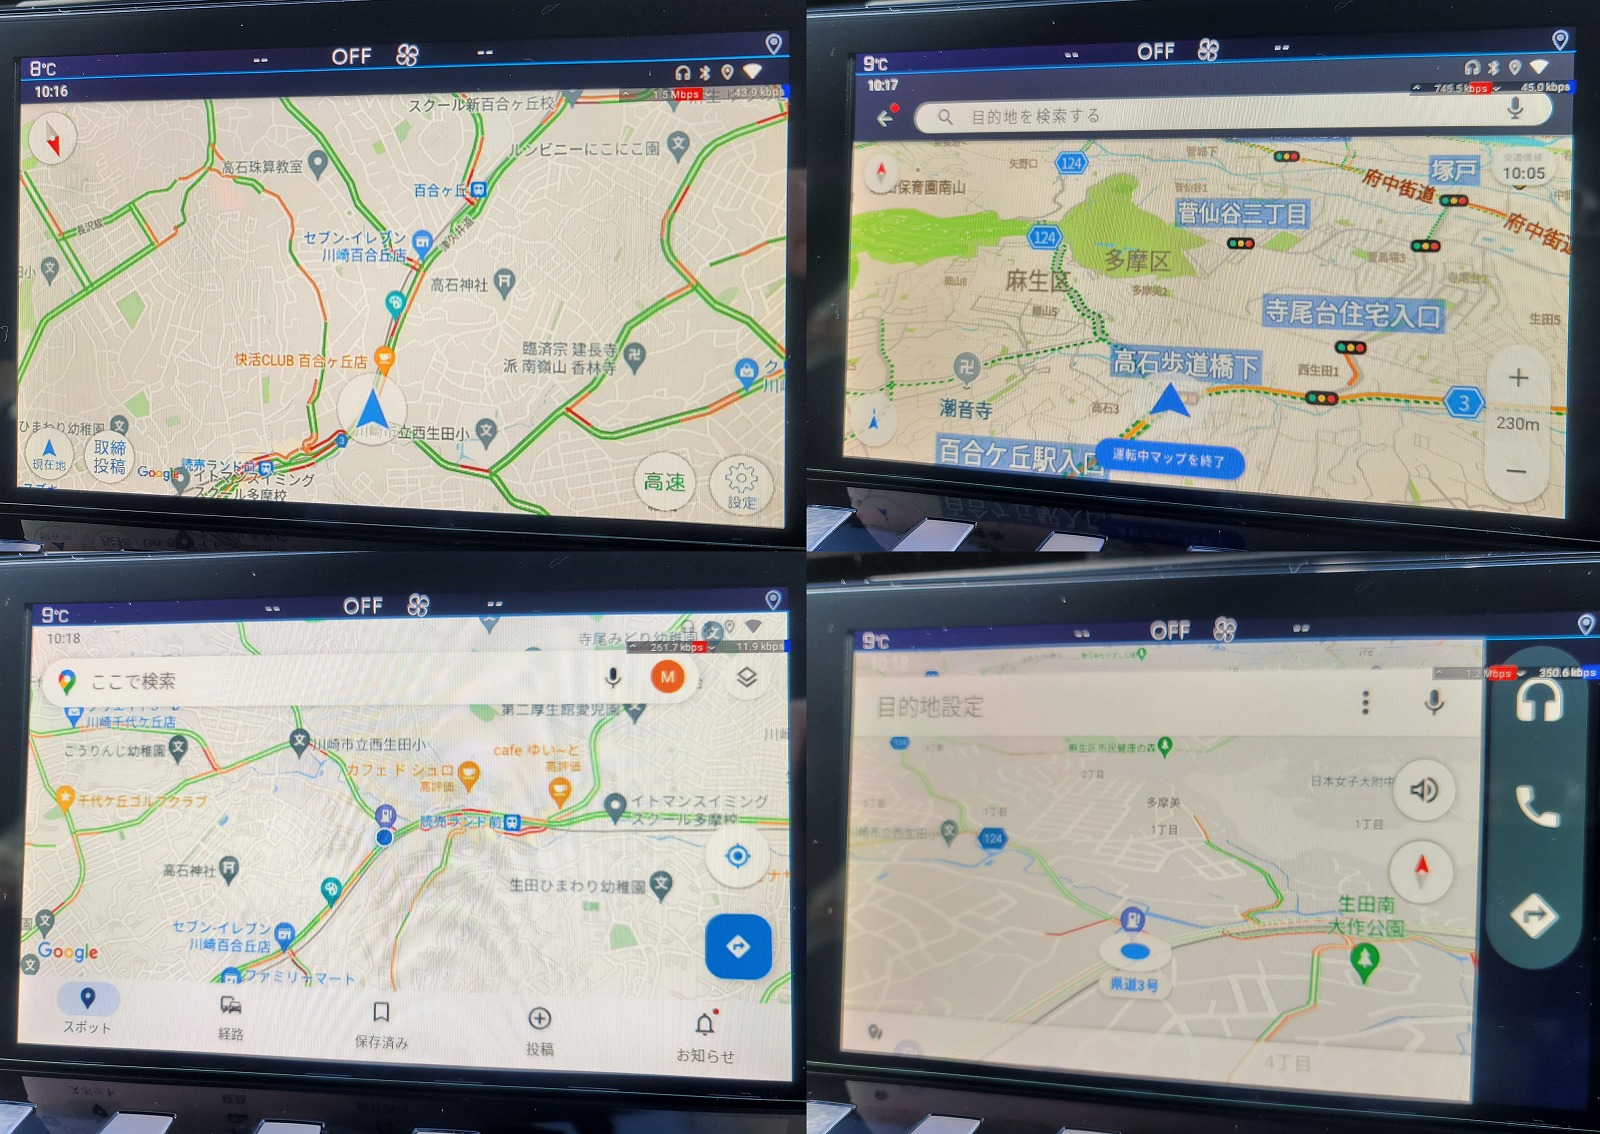 OTTOCAST CarPlay AI Box Android 9.0のマップ表示を比較してみる 